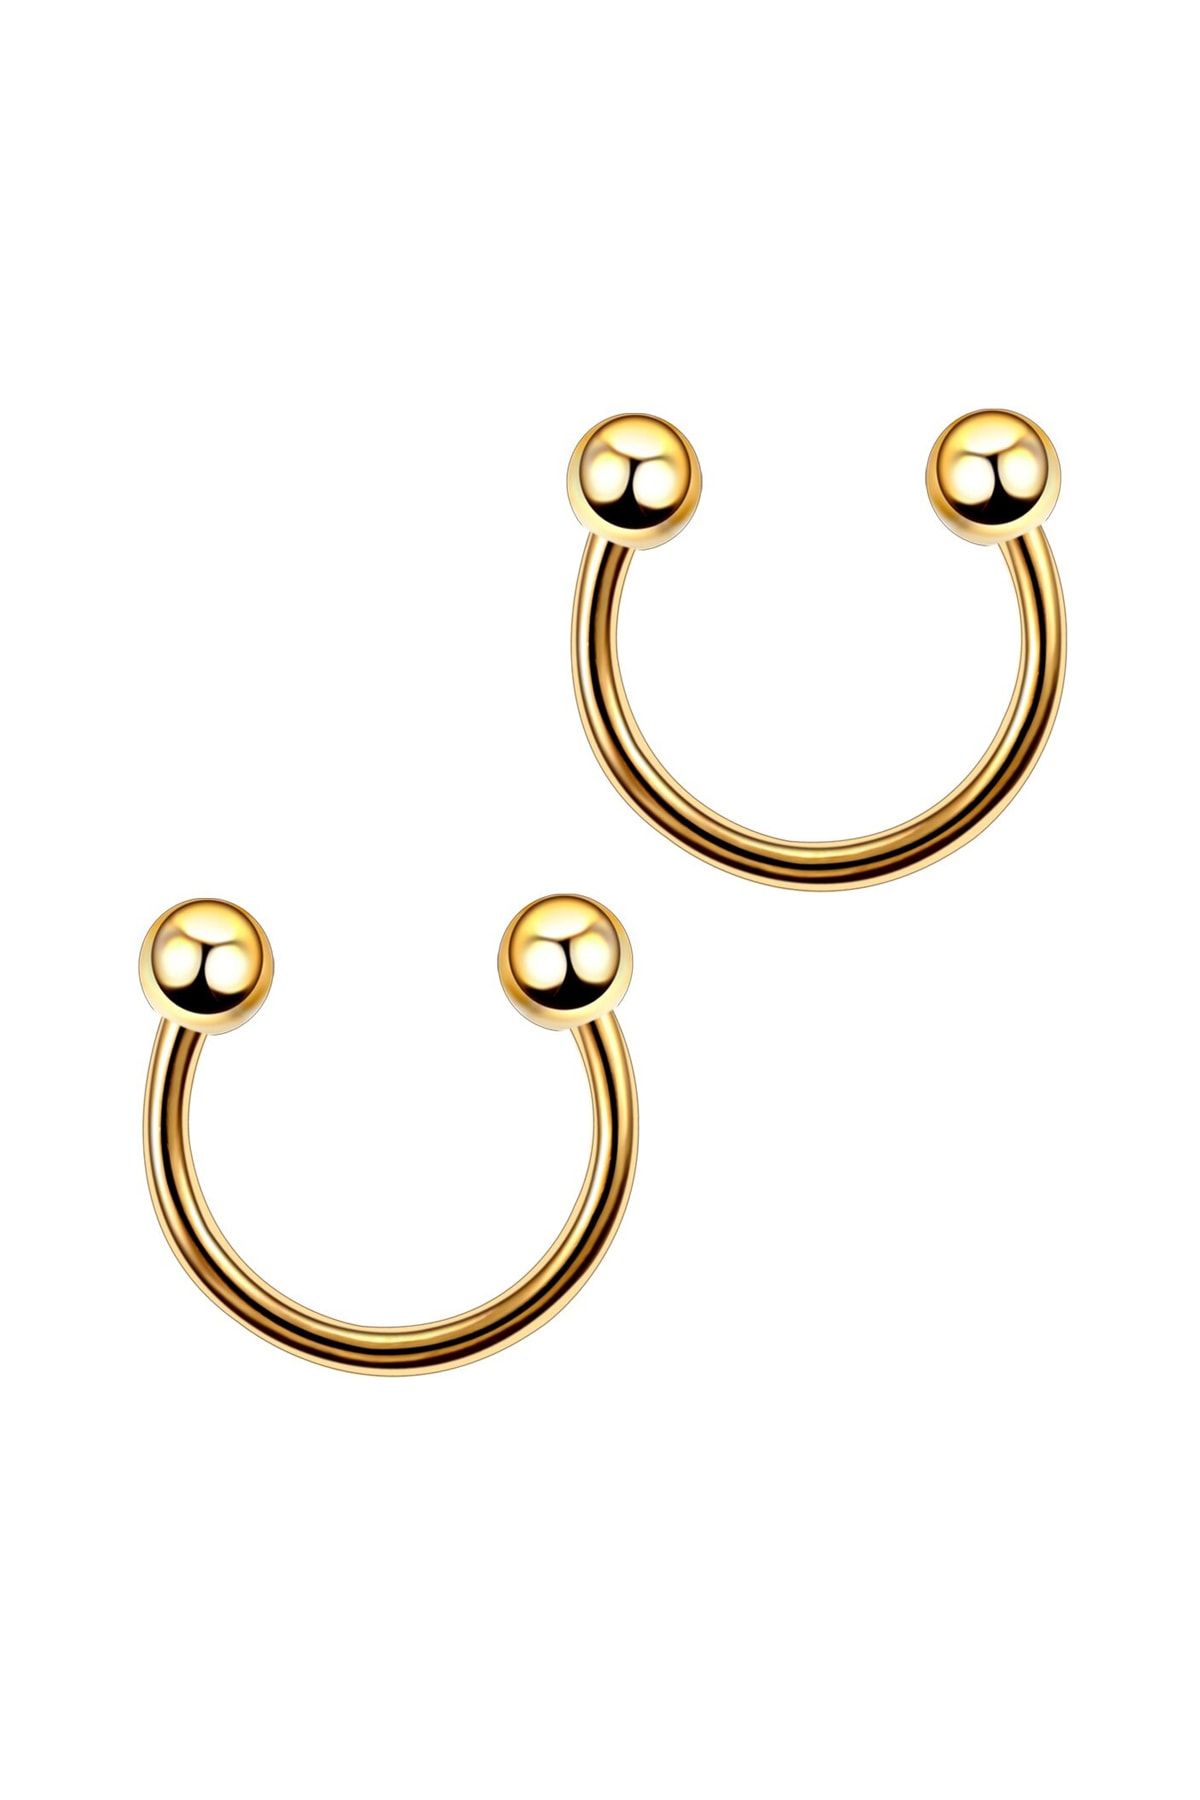 Vilma Aksesuar Cerrahi Çelik Piercing 2 Li Set Kulak-dudak-tragus 8mm Gold Renk